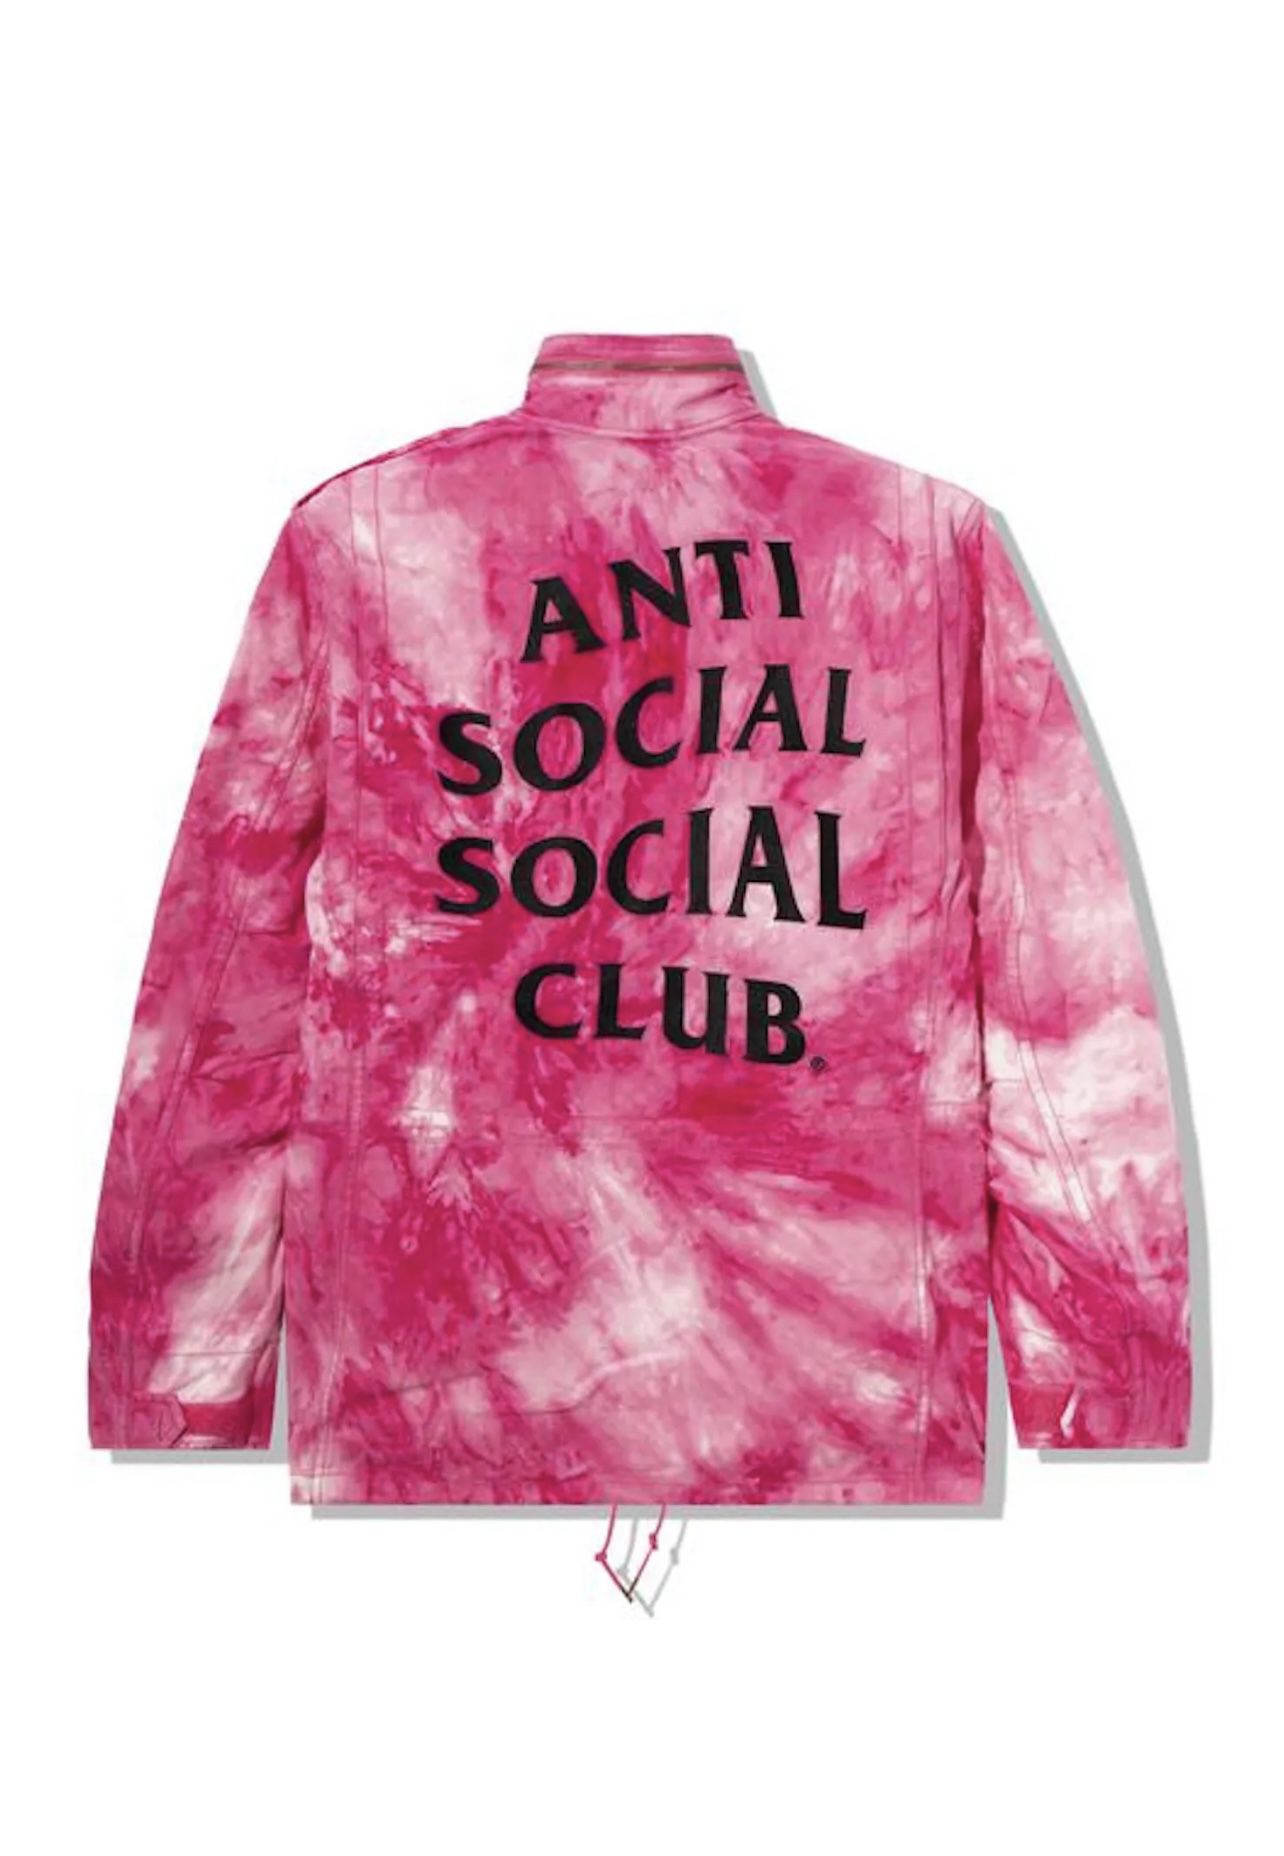  100% Authentic Anti Social Social Club x Alpha Industries M-65 Pink Tie Dye Jacket!